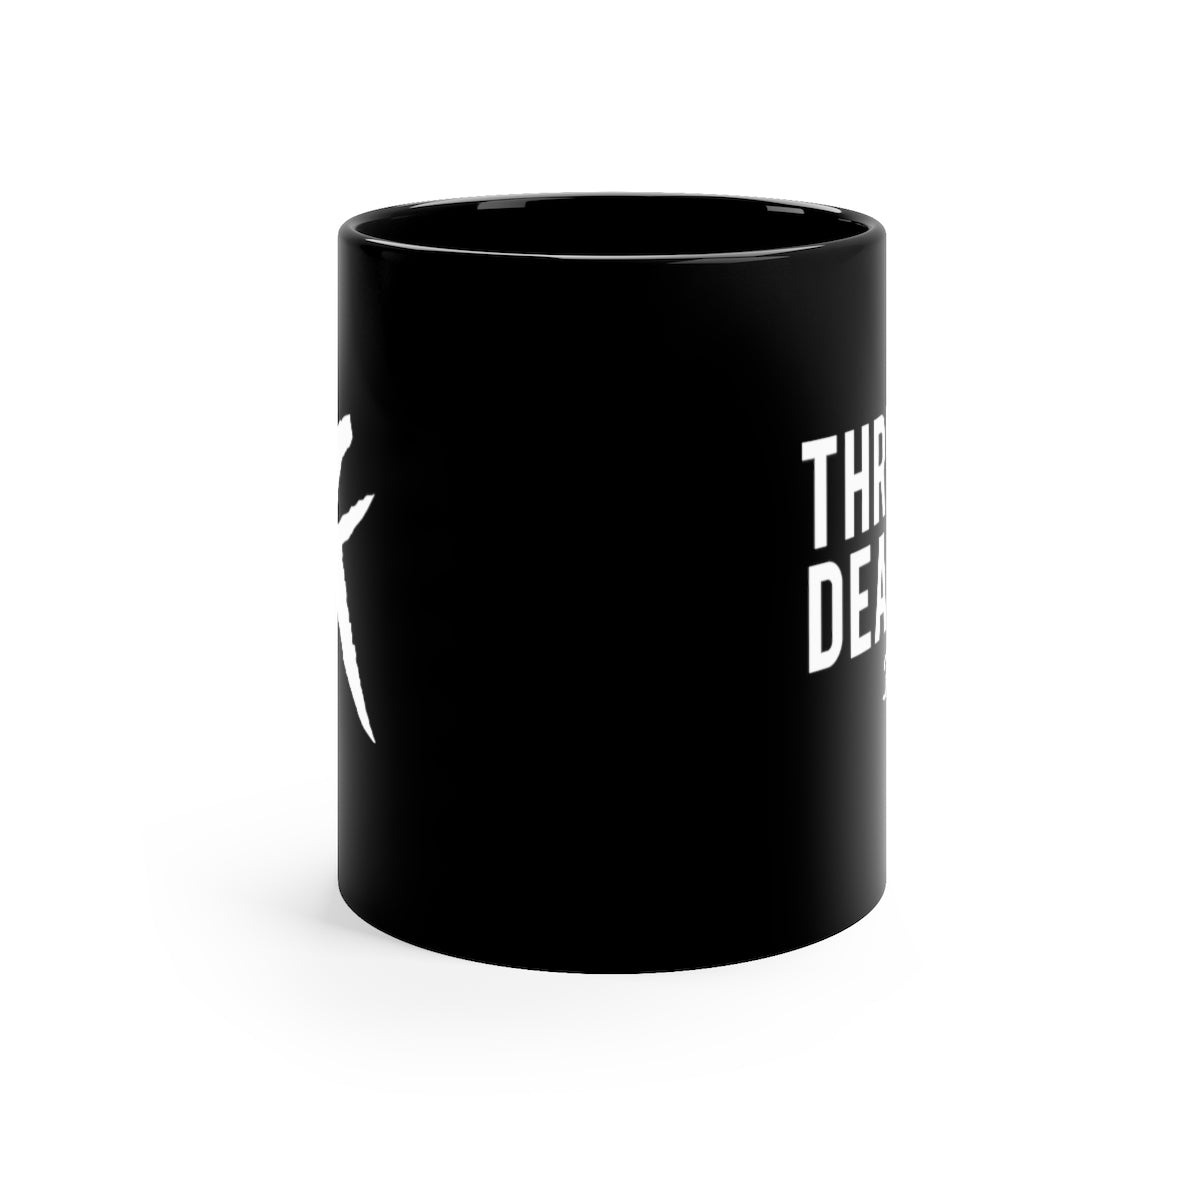 Thread Dealer Mug - Black